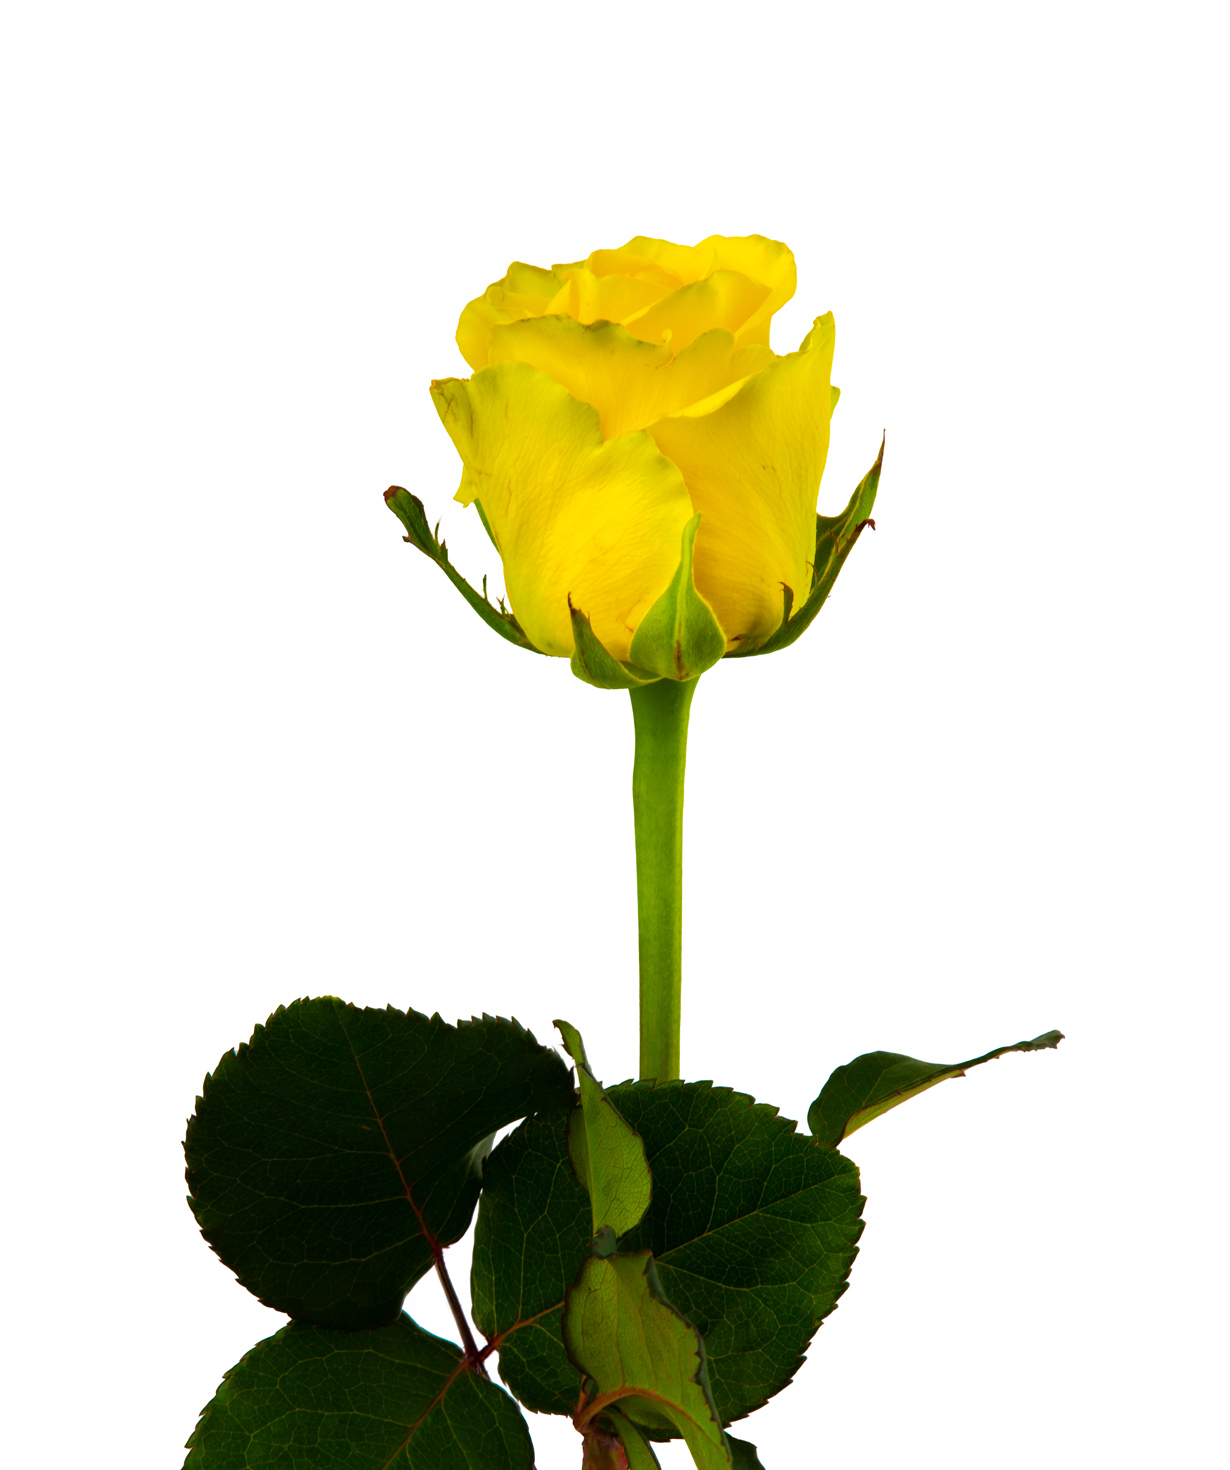 Gyumri rose «Penny Lane» yellow, 80 cm